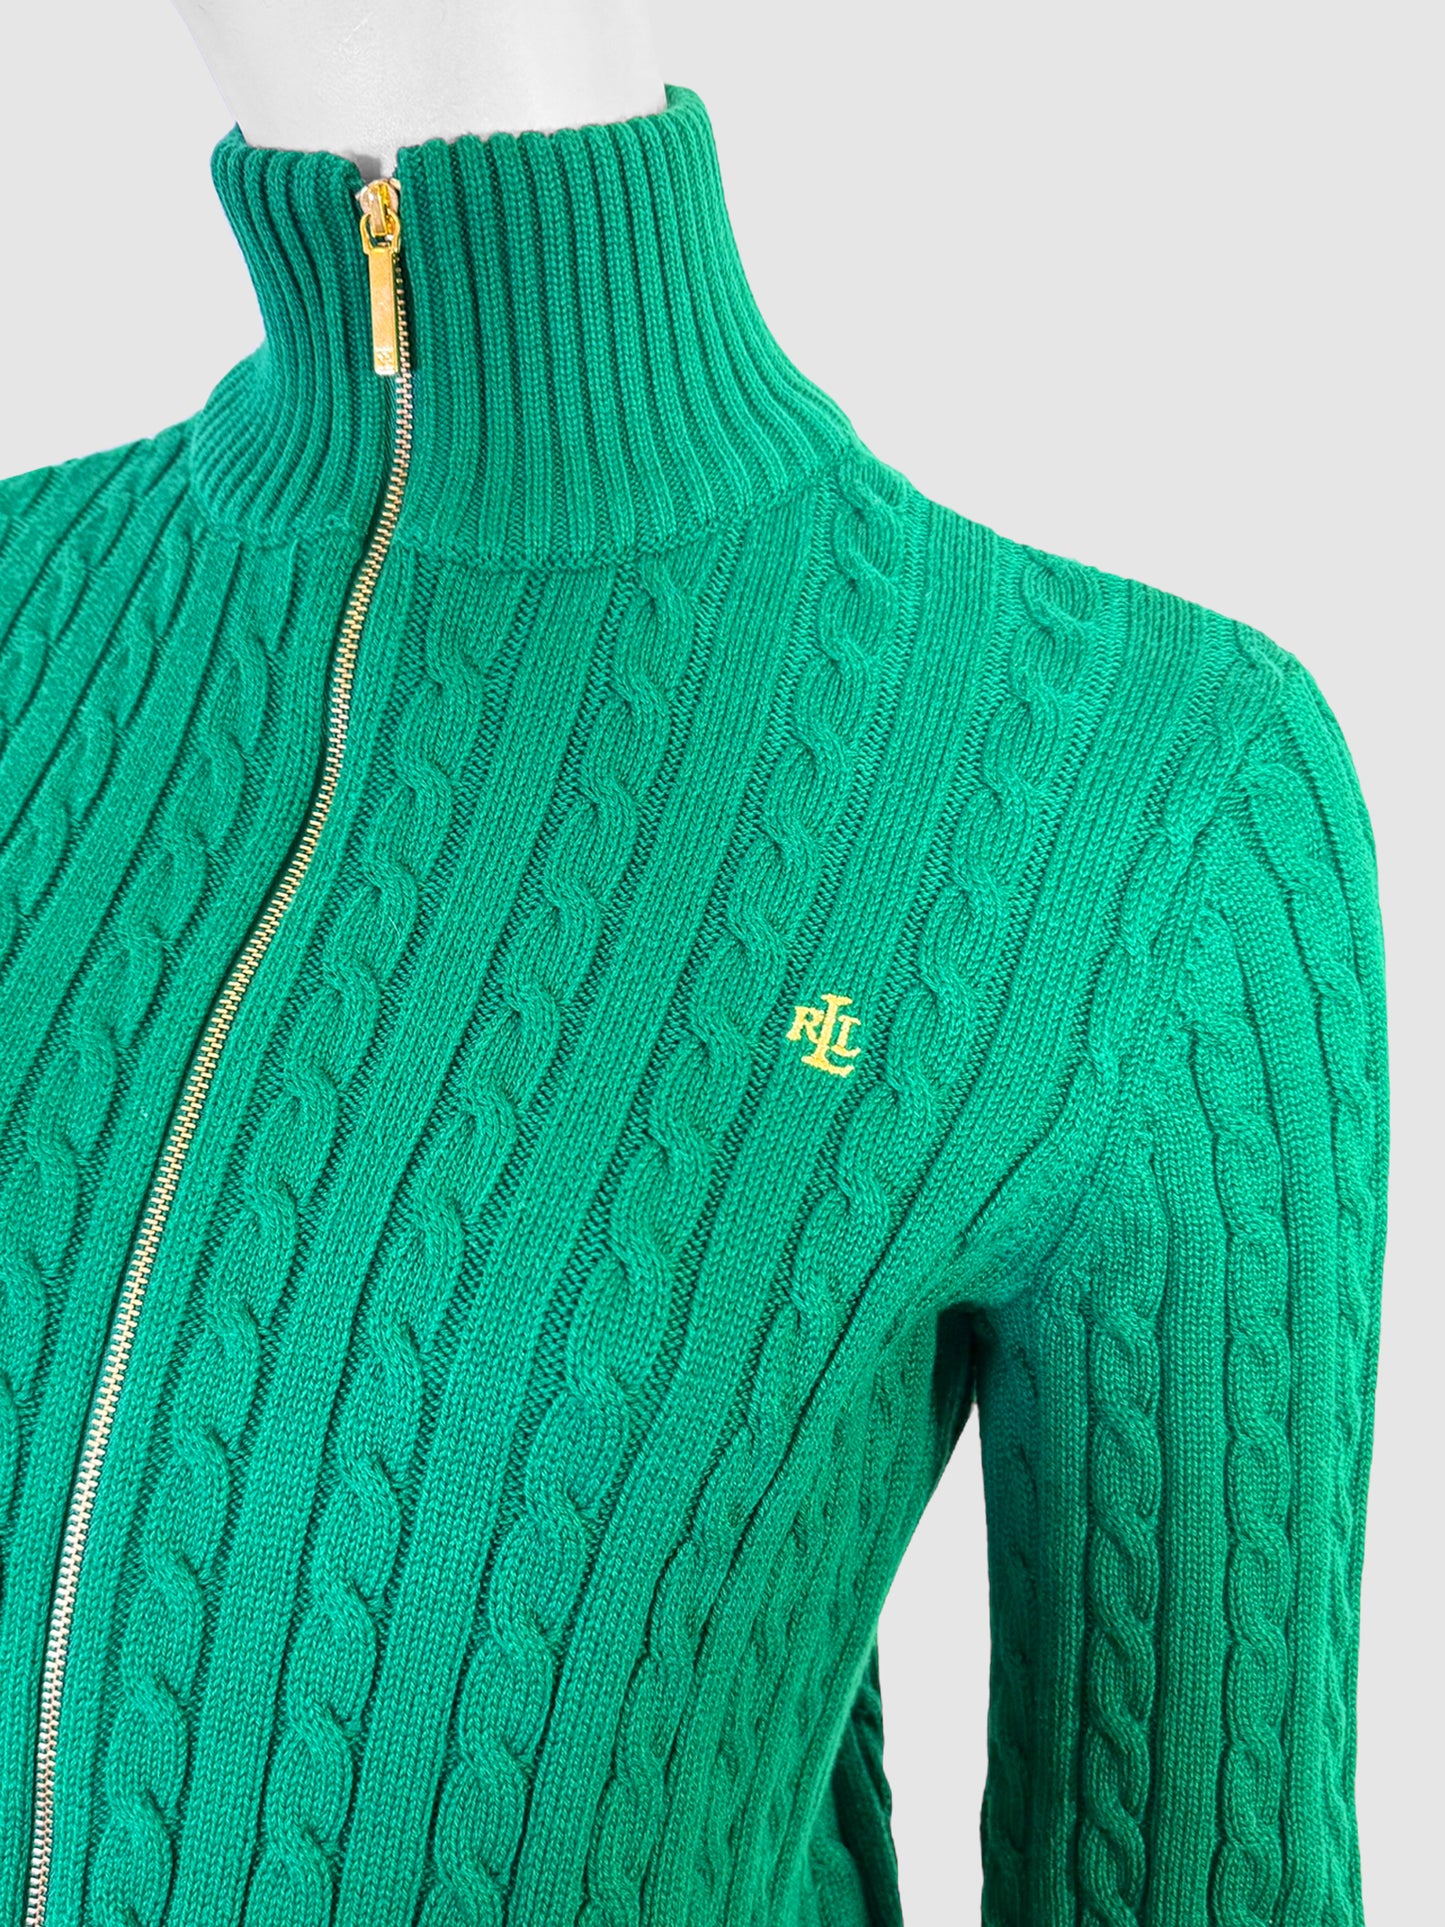 Ralph Lauren Zip-Up Knit Sweater - Size S